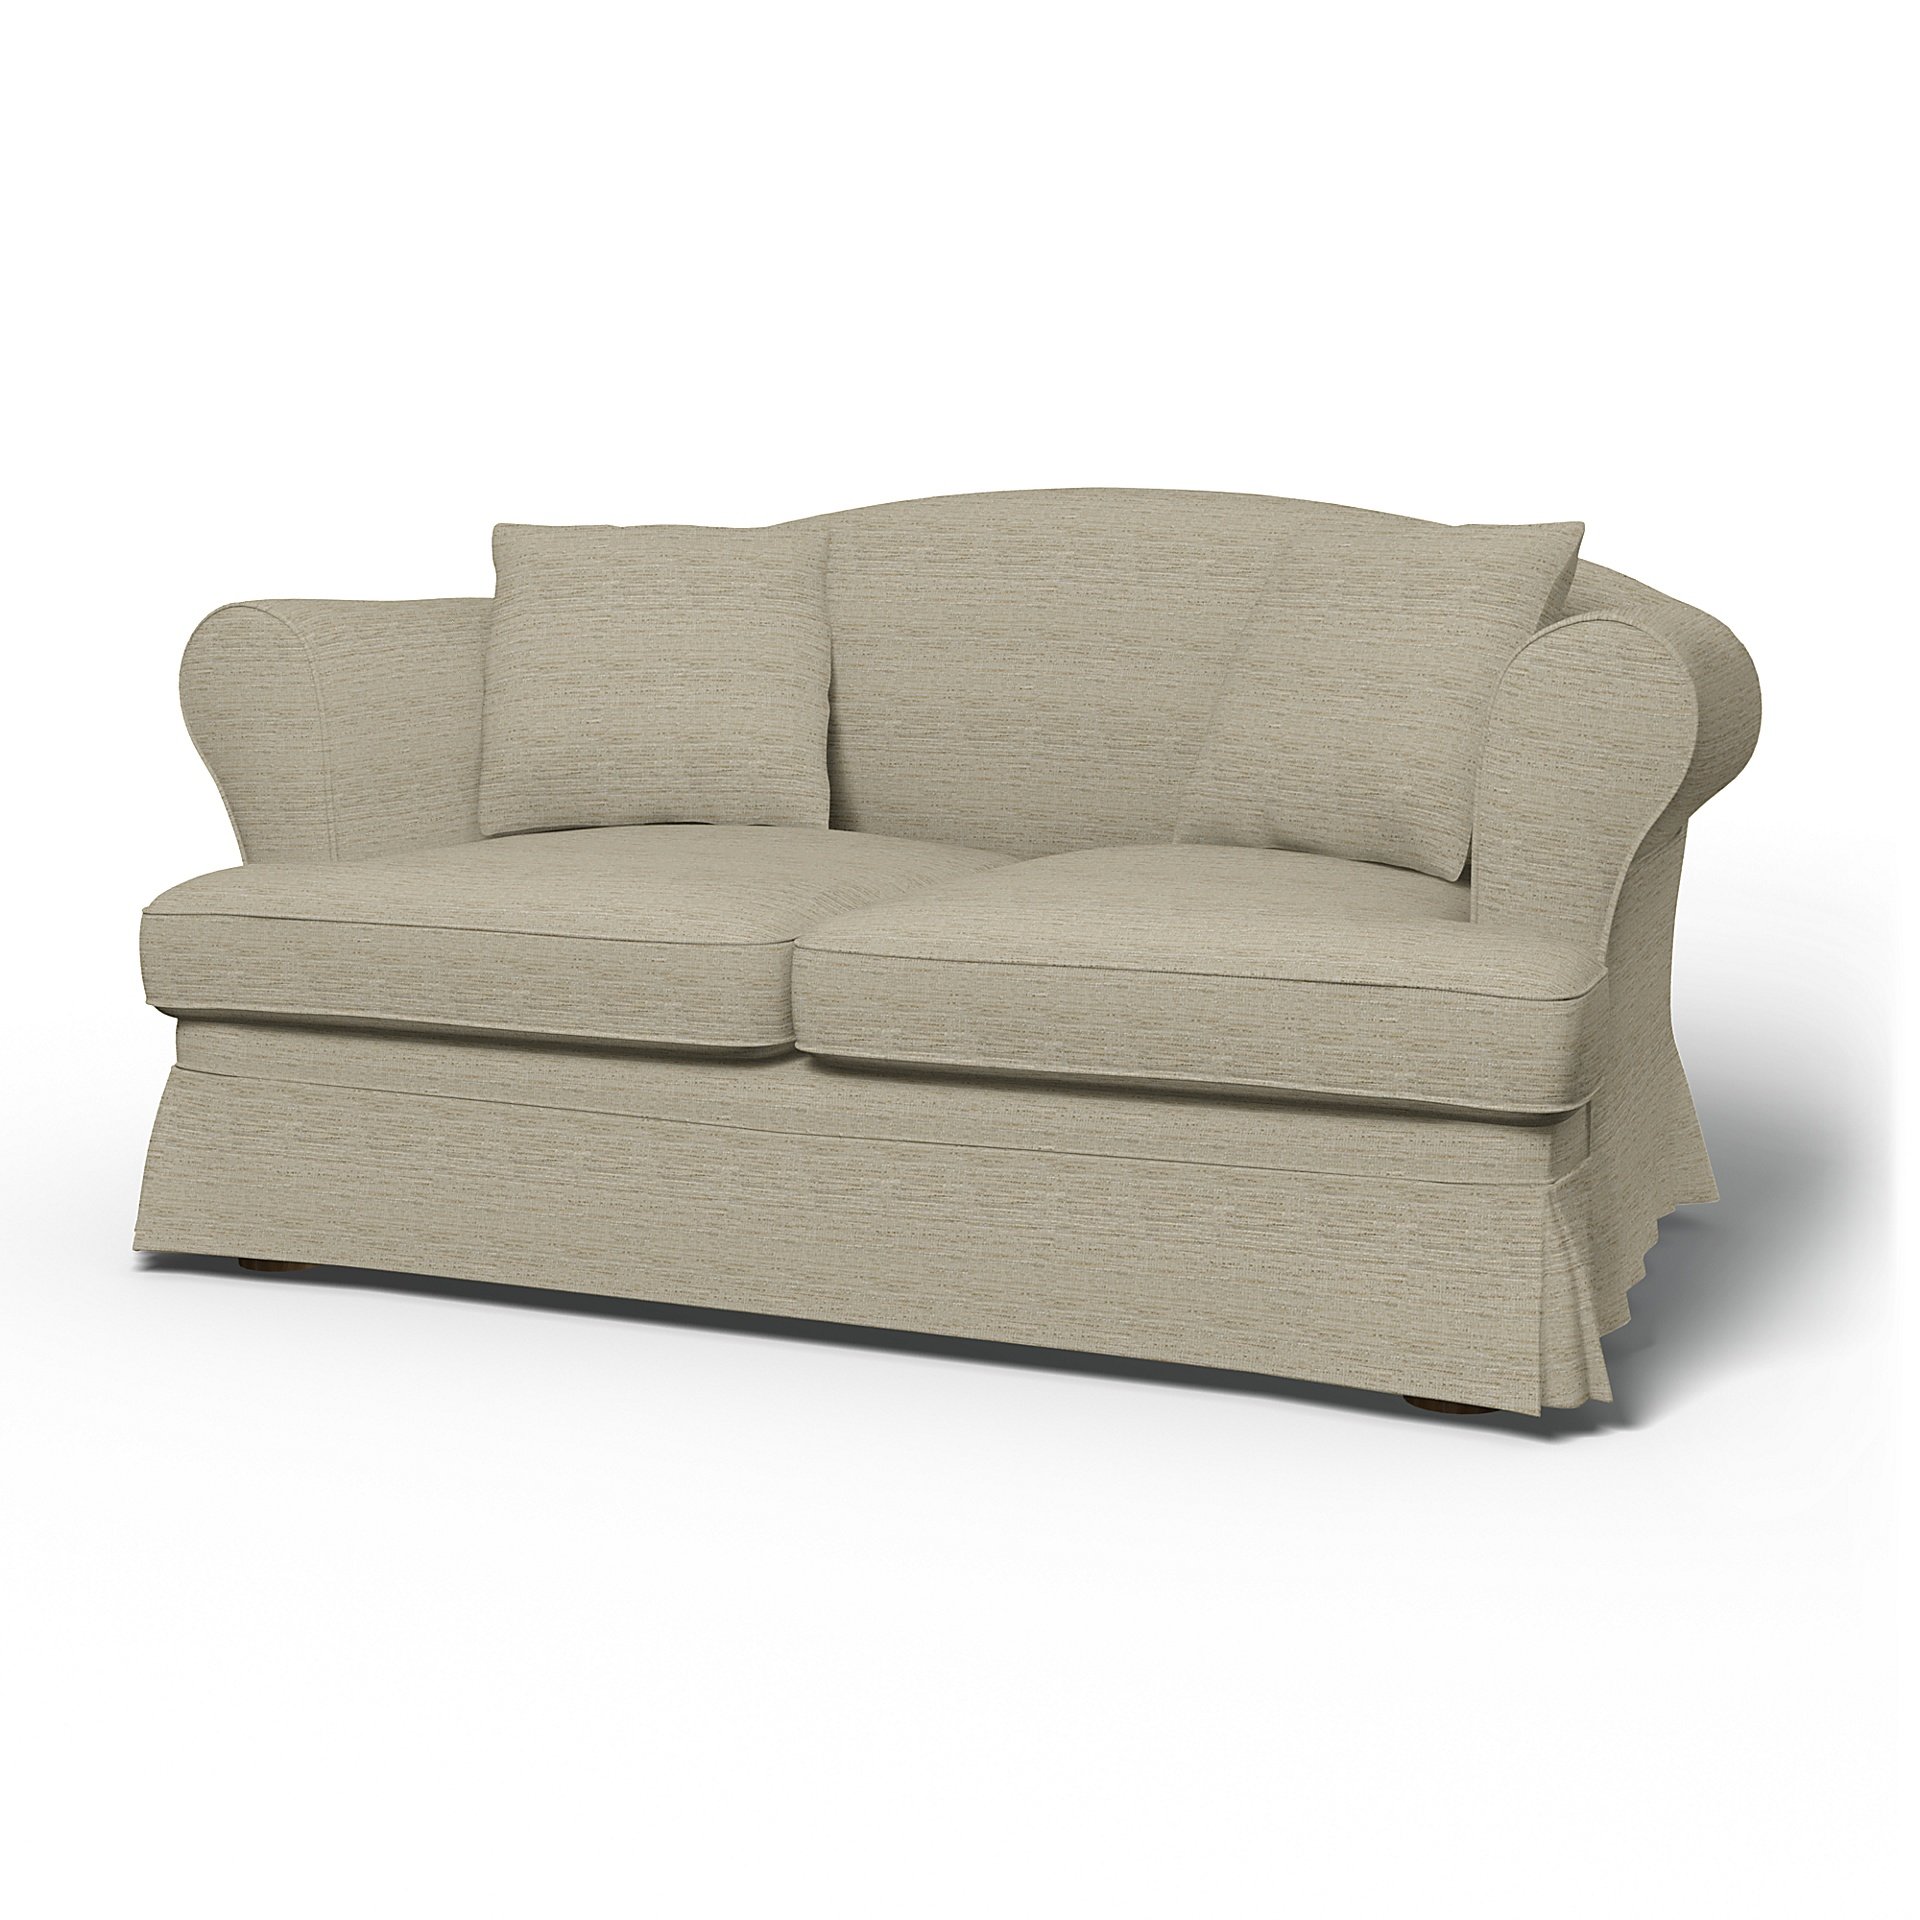 IKEA - Sundborn 2 Seater Sofa Cover, Light Sand, Boucle & Texture - Bemz